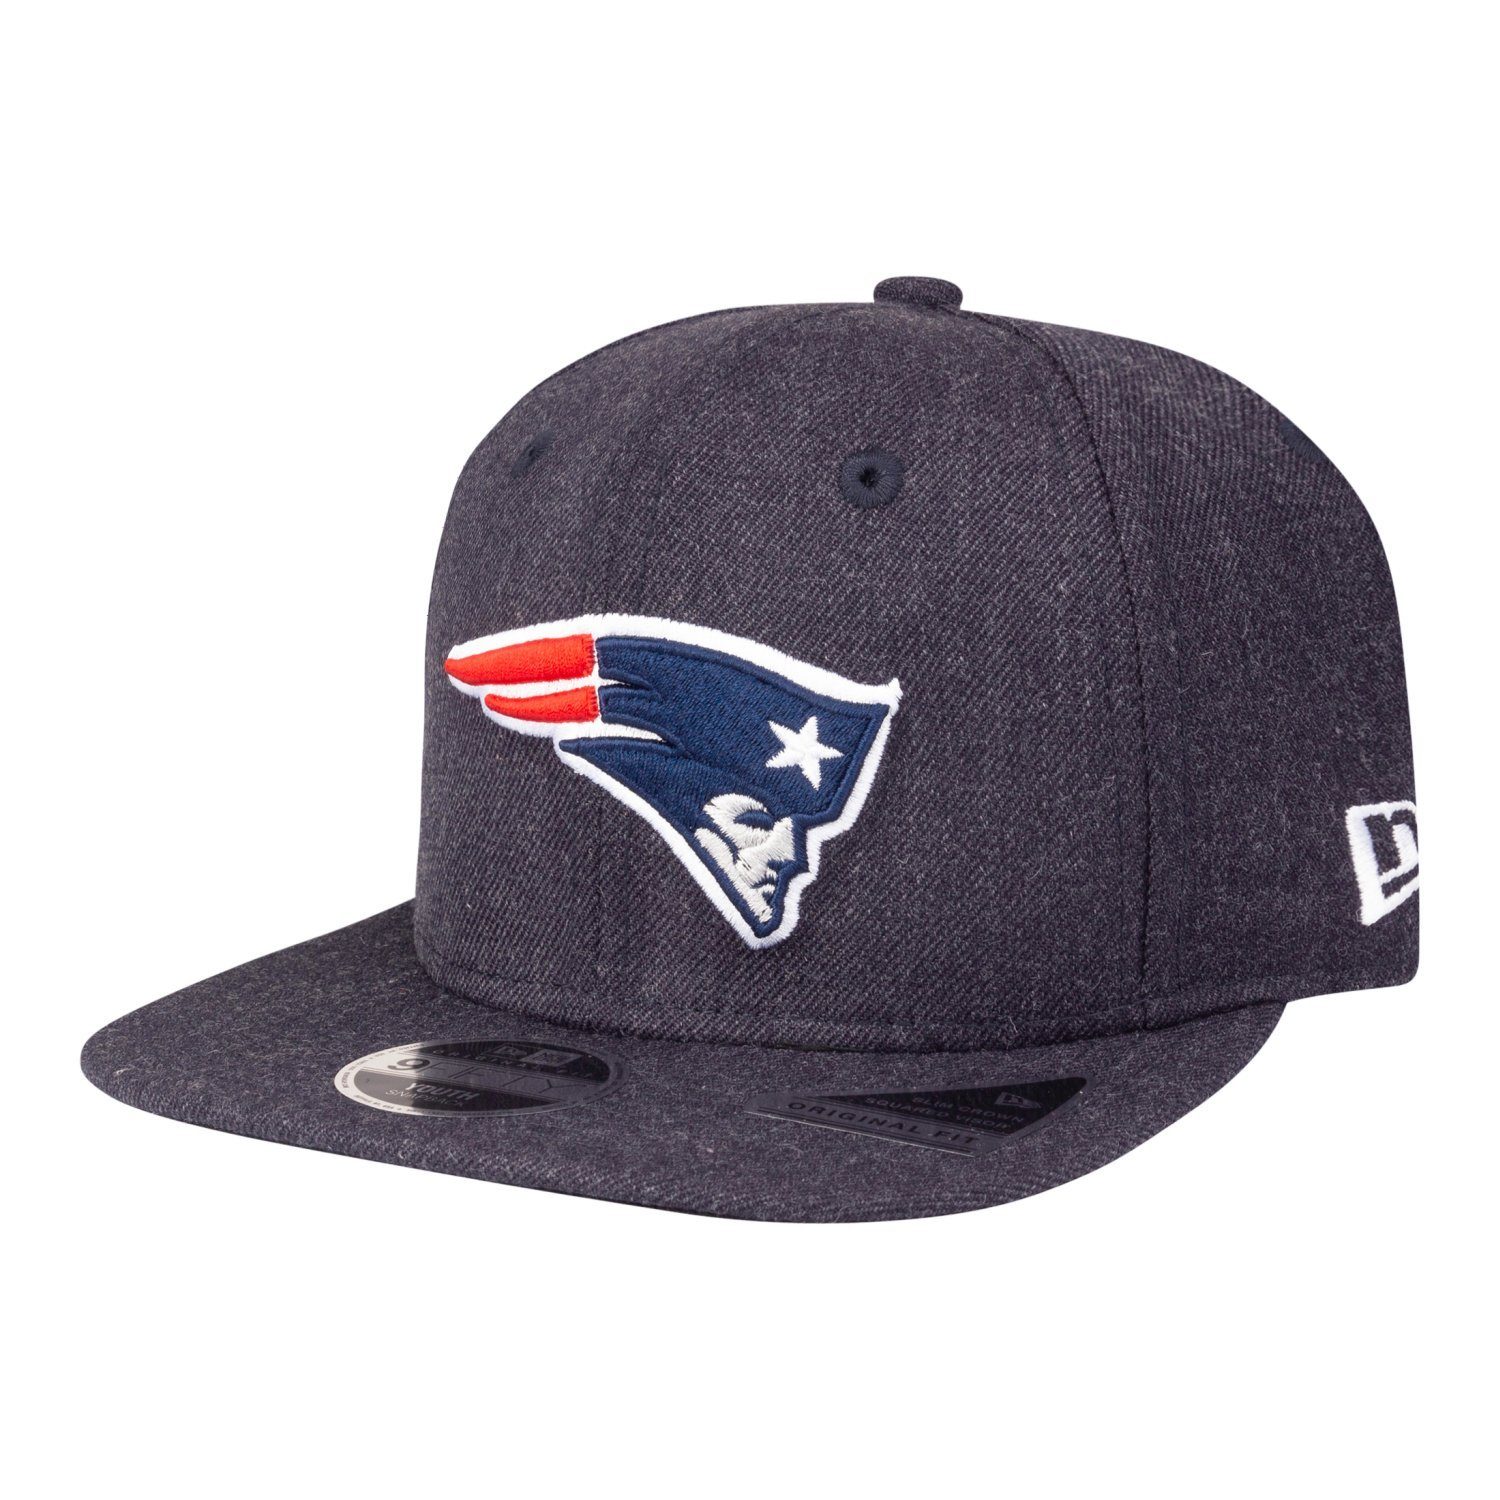 Mit bester Qualität! New Era Baseball Cap 9Fifty New England Patriots